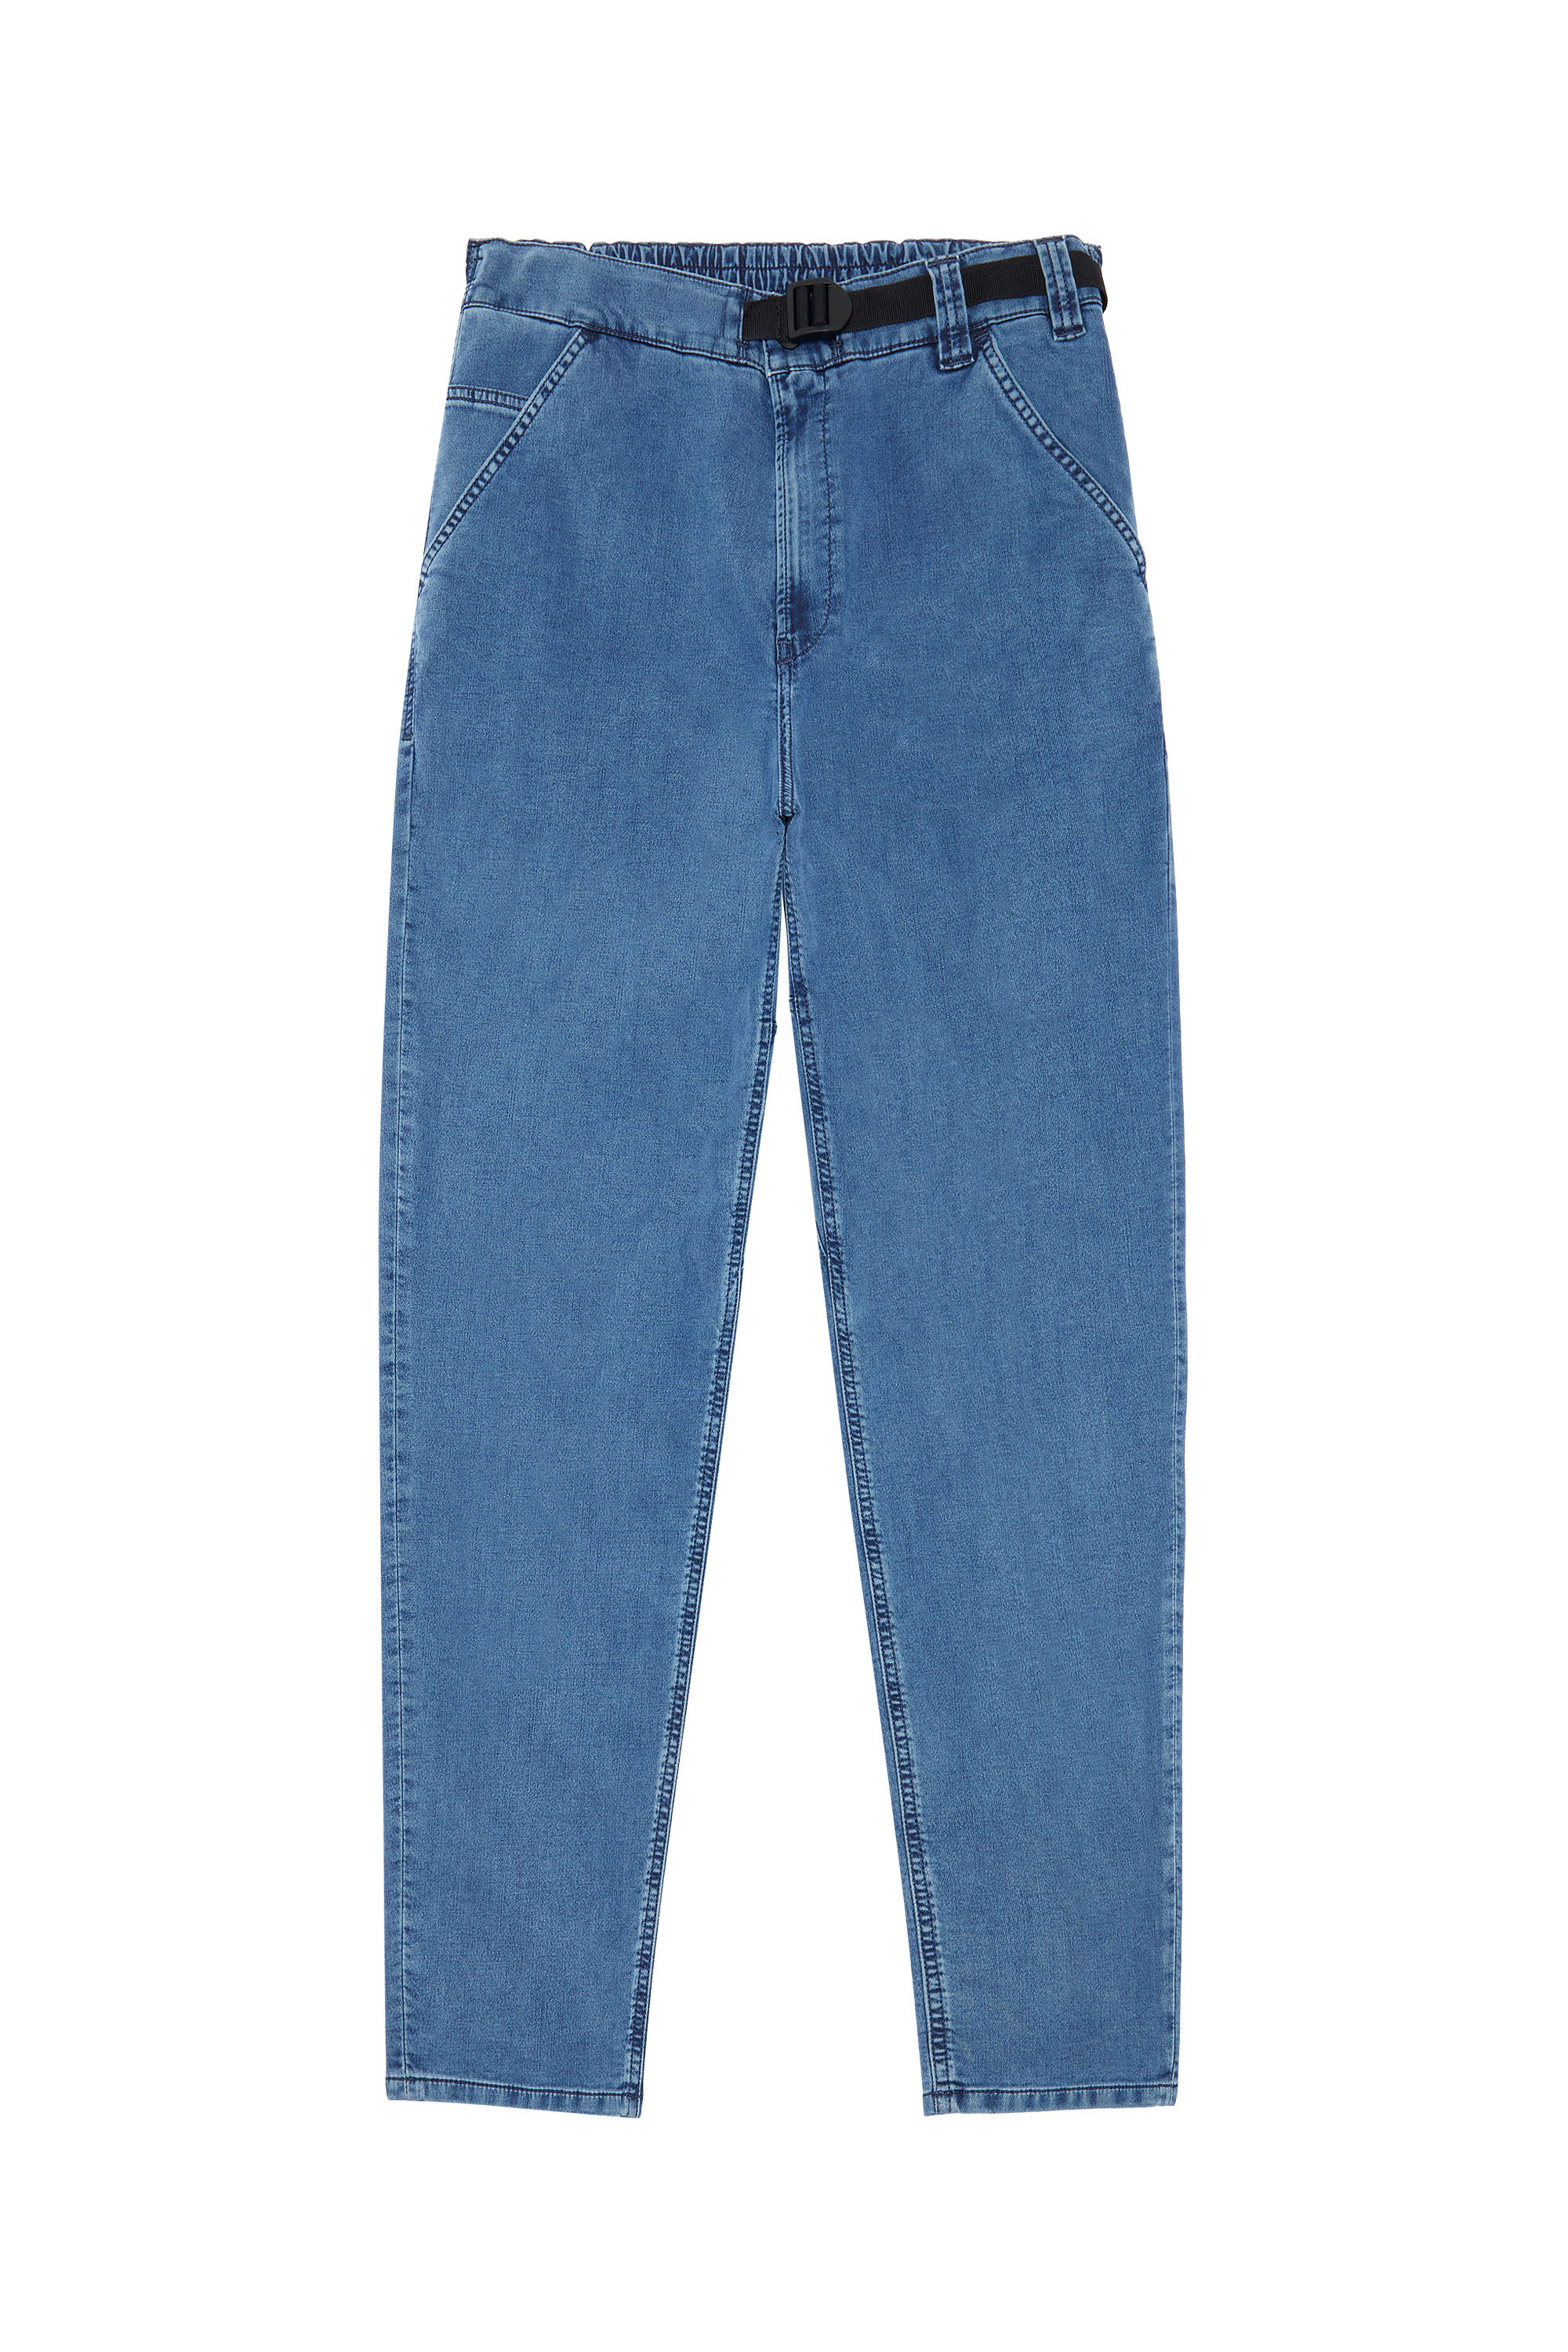 Krooley JoggJeans® 069ZK Tapered, Mittelblau - Jeans